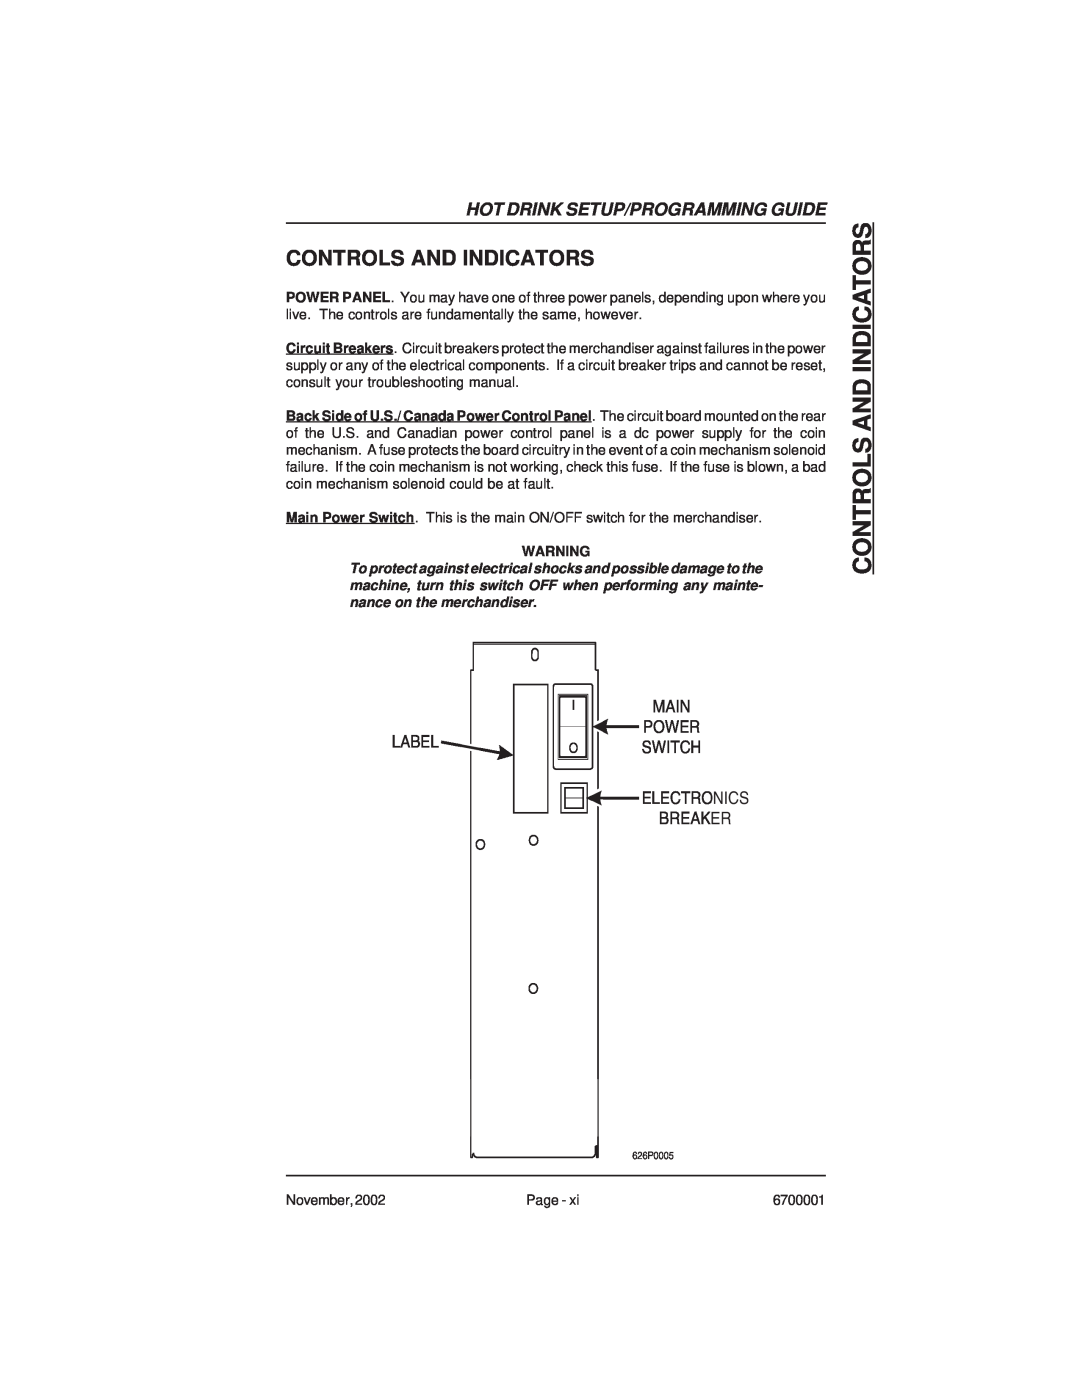 Crane Merchandising Systems 678, 670 manual Controls And Indicators, Hot Drink Setup/Programming Guide 